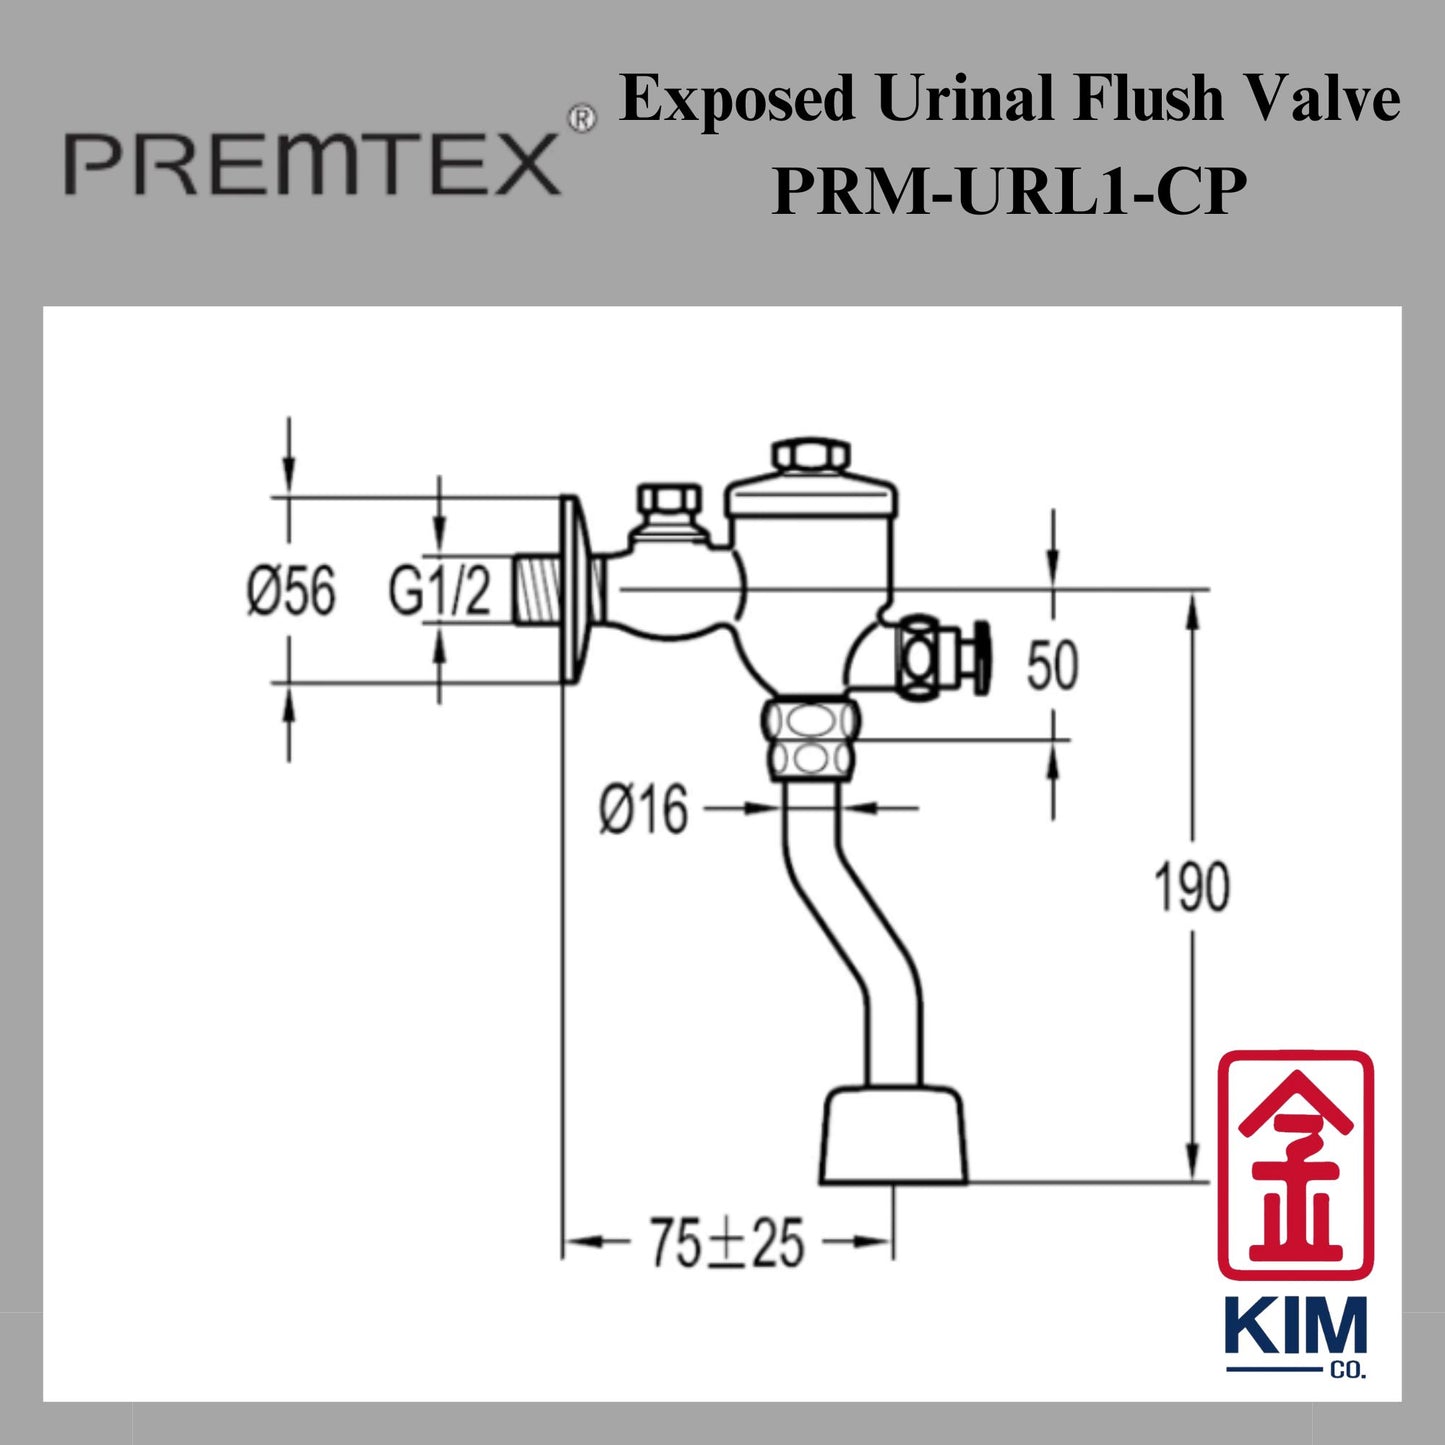 Premtex Exposed Urinal Flush Valve Cw Bend (PRM-URL1-CP)